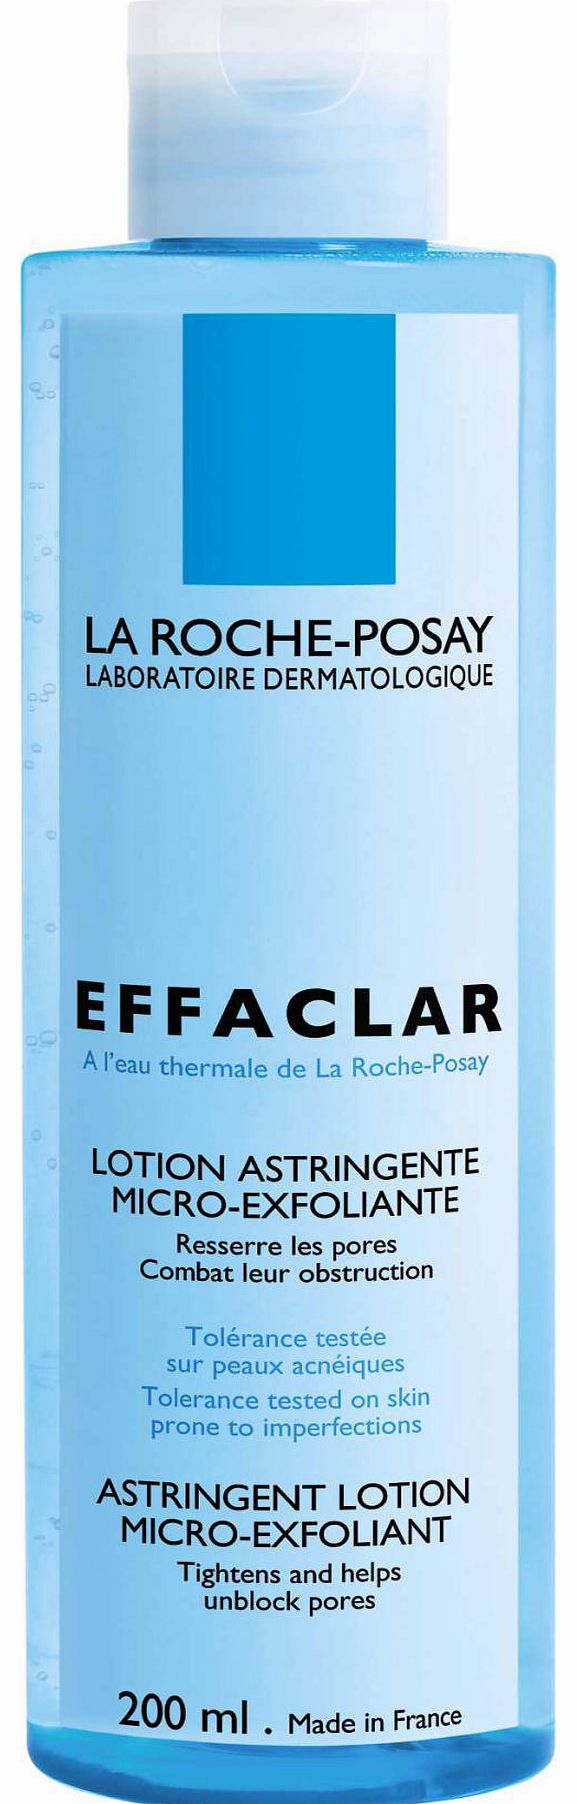 EFFACLAR La Roche-Posay Effaclar Clarifying Lotion